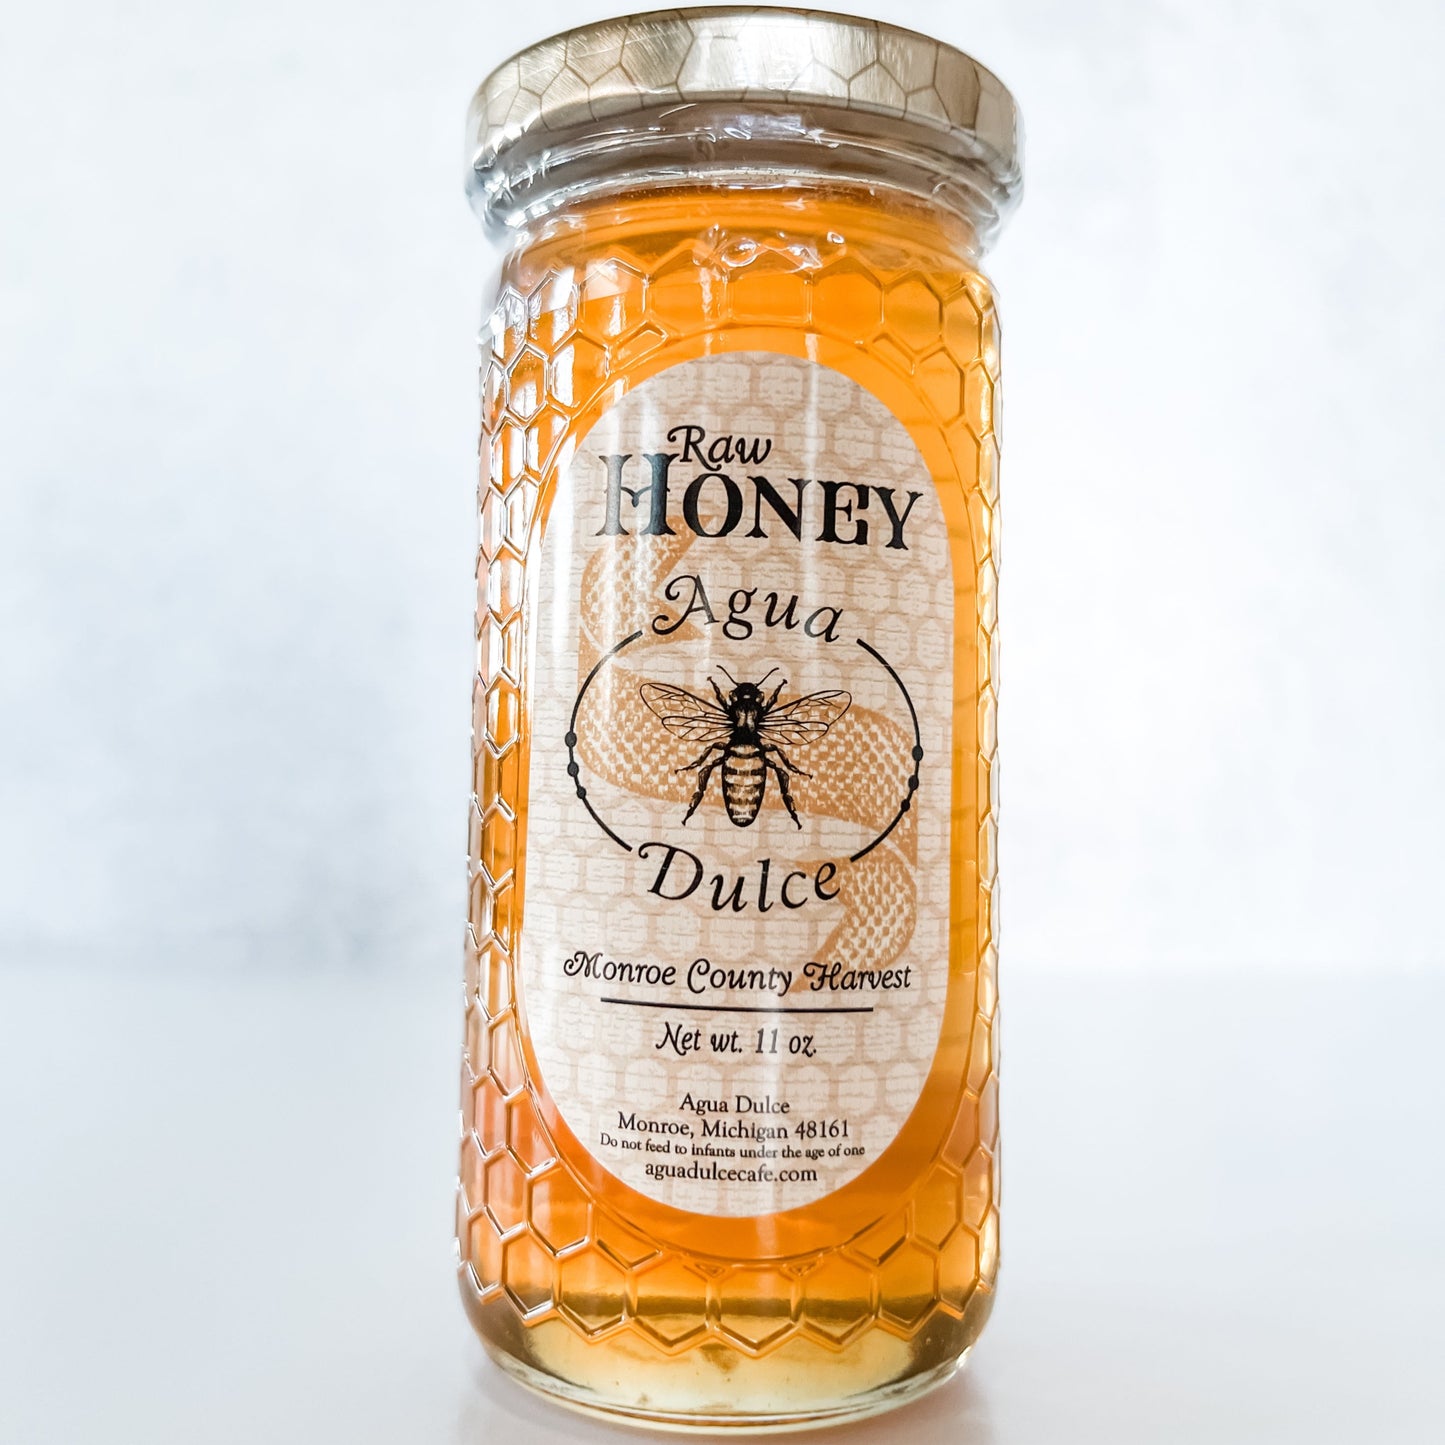 Hex Honey Jar